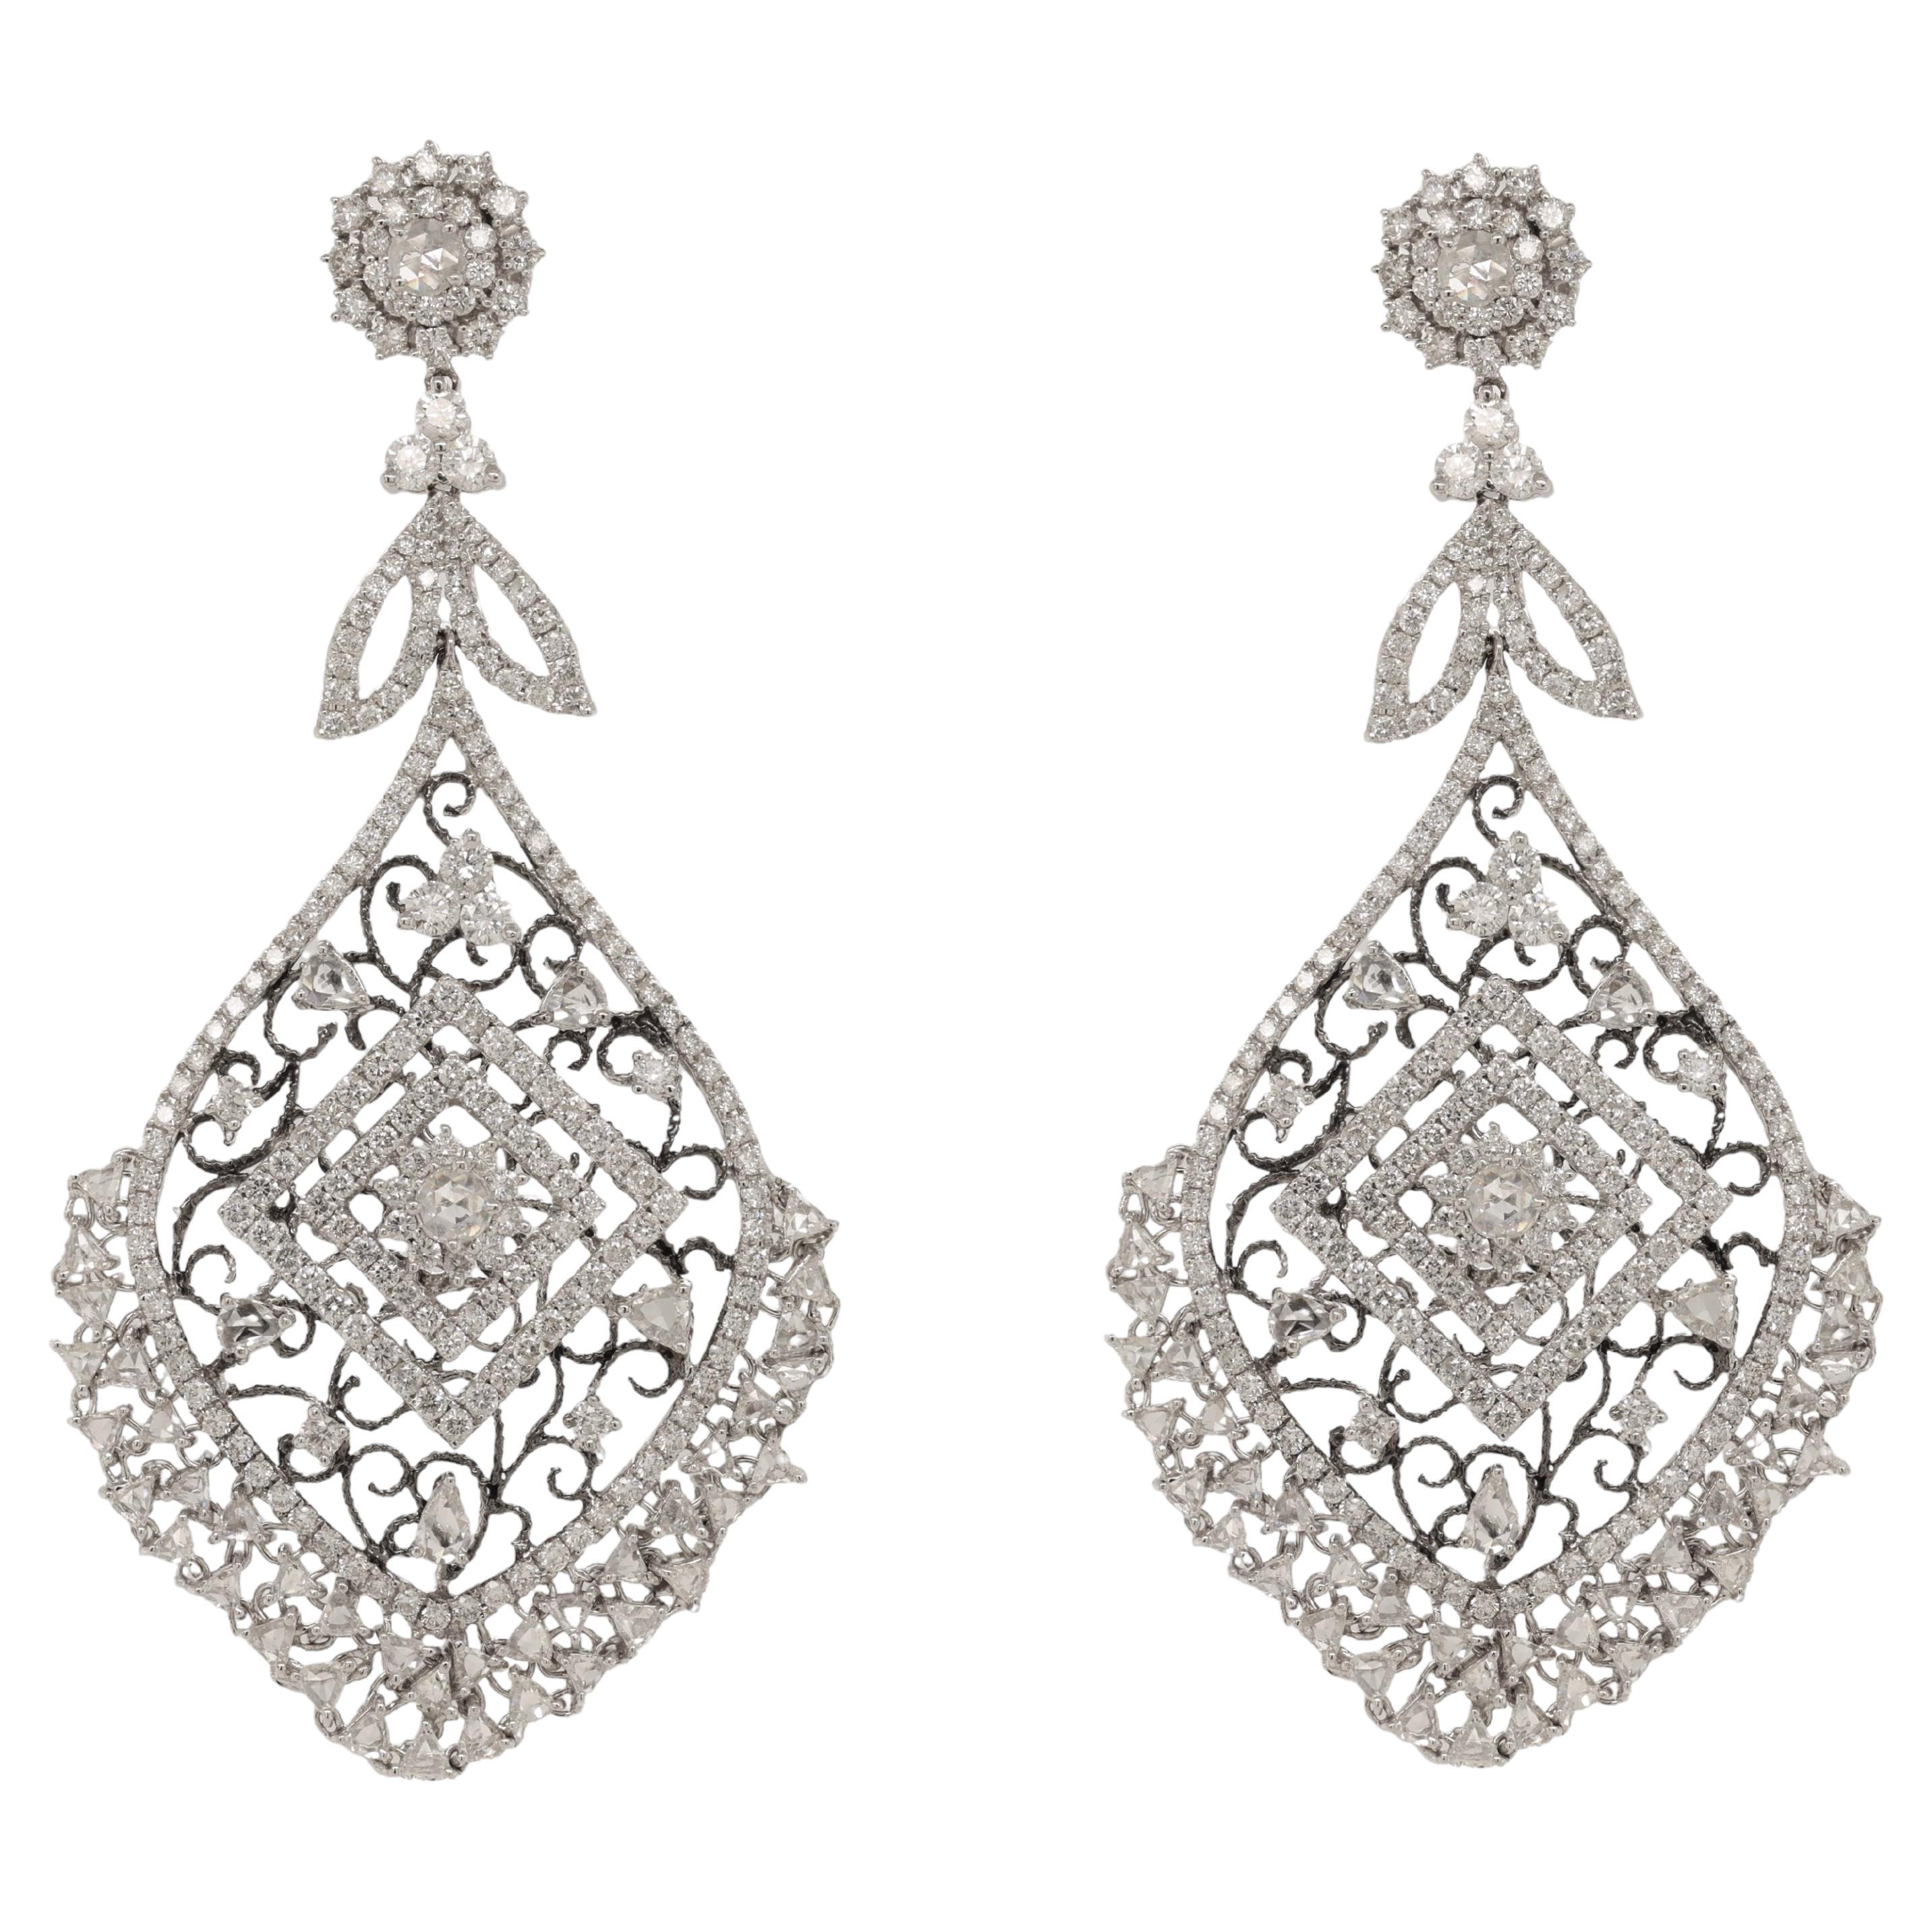  18kt W Gold Jacob & Co Chandelier Earrings With Rose Cut & Brilliant Diamonds